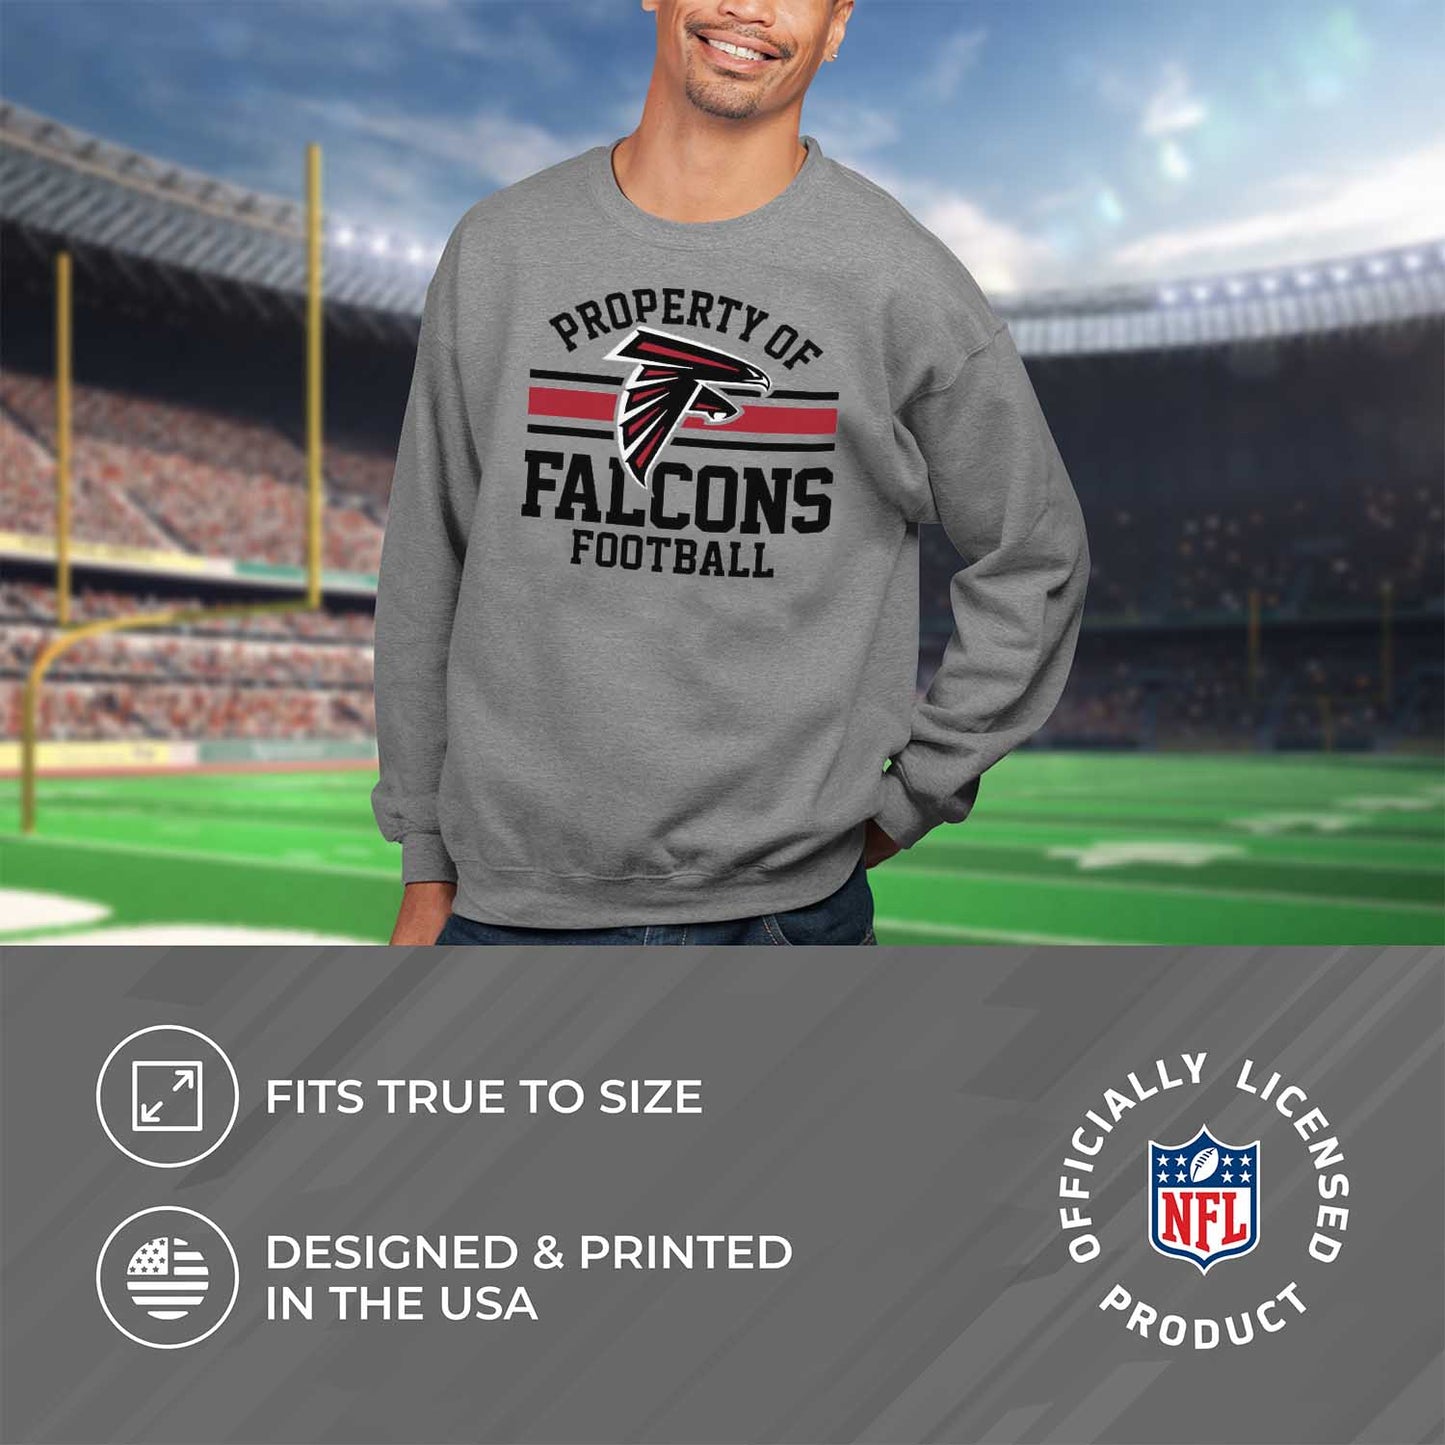 Atlanta Falcons NFL Adult Property Of Crewneck Fleece Sweatshirt - Sport Gray